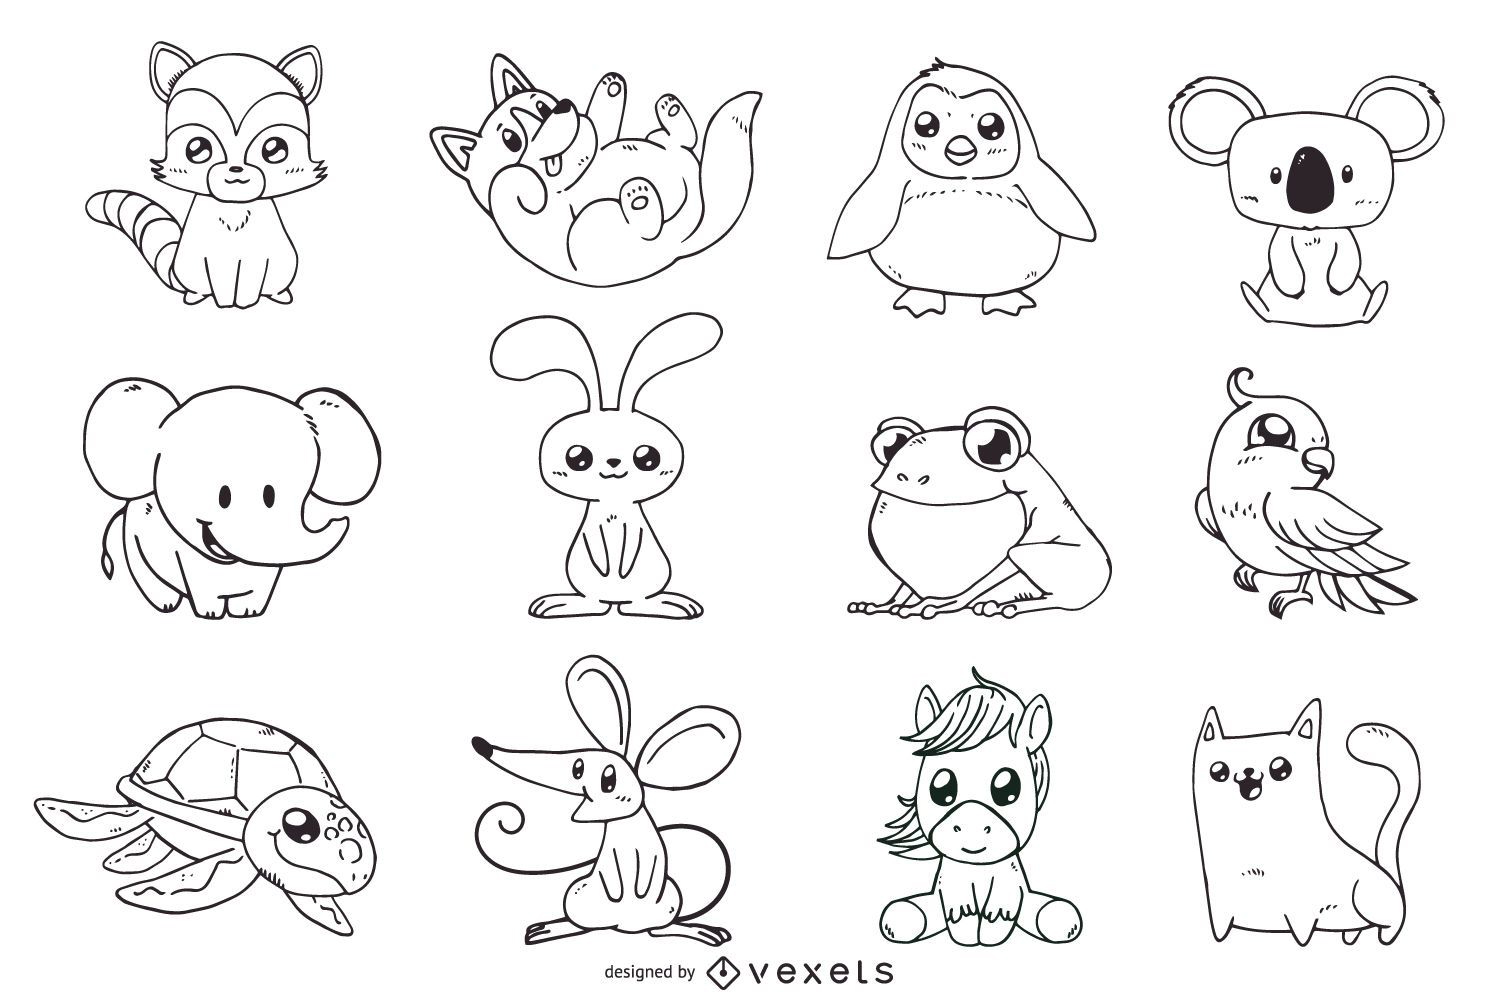 Cute animals outline illustrations set